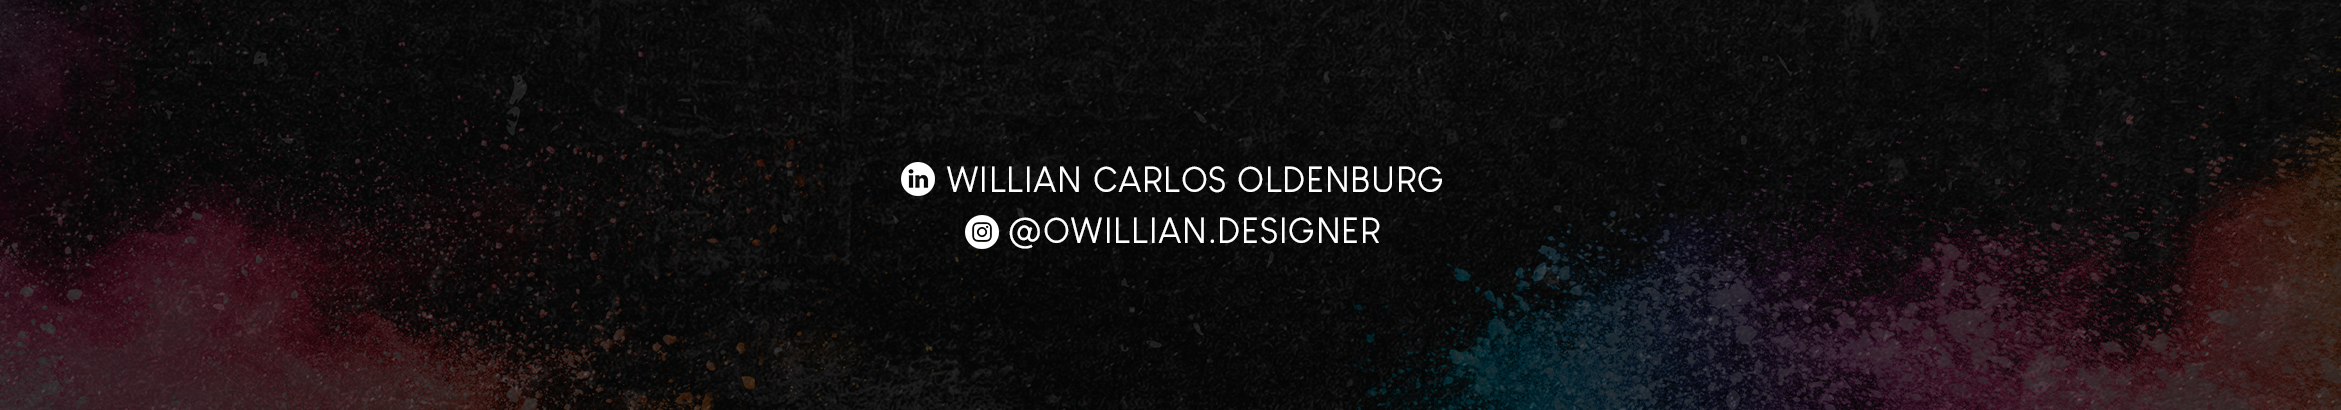 Willian Carlos Oldenburgs profilbanner